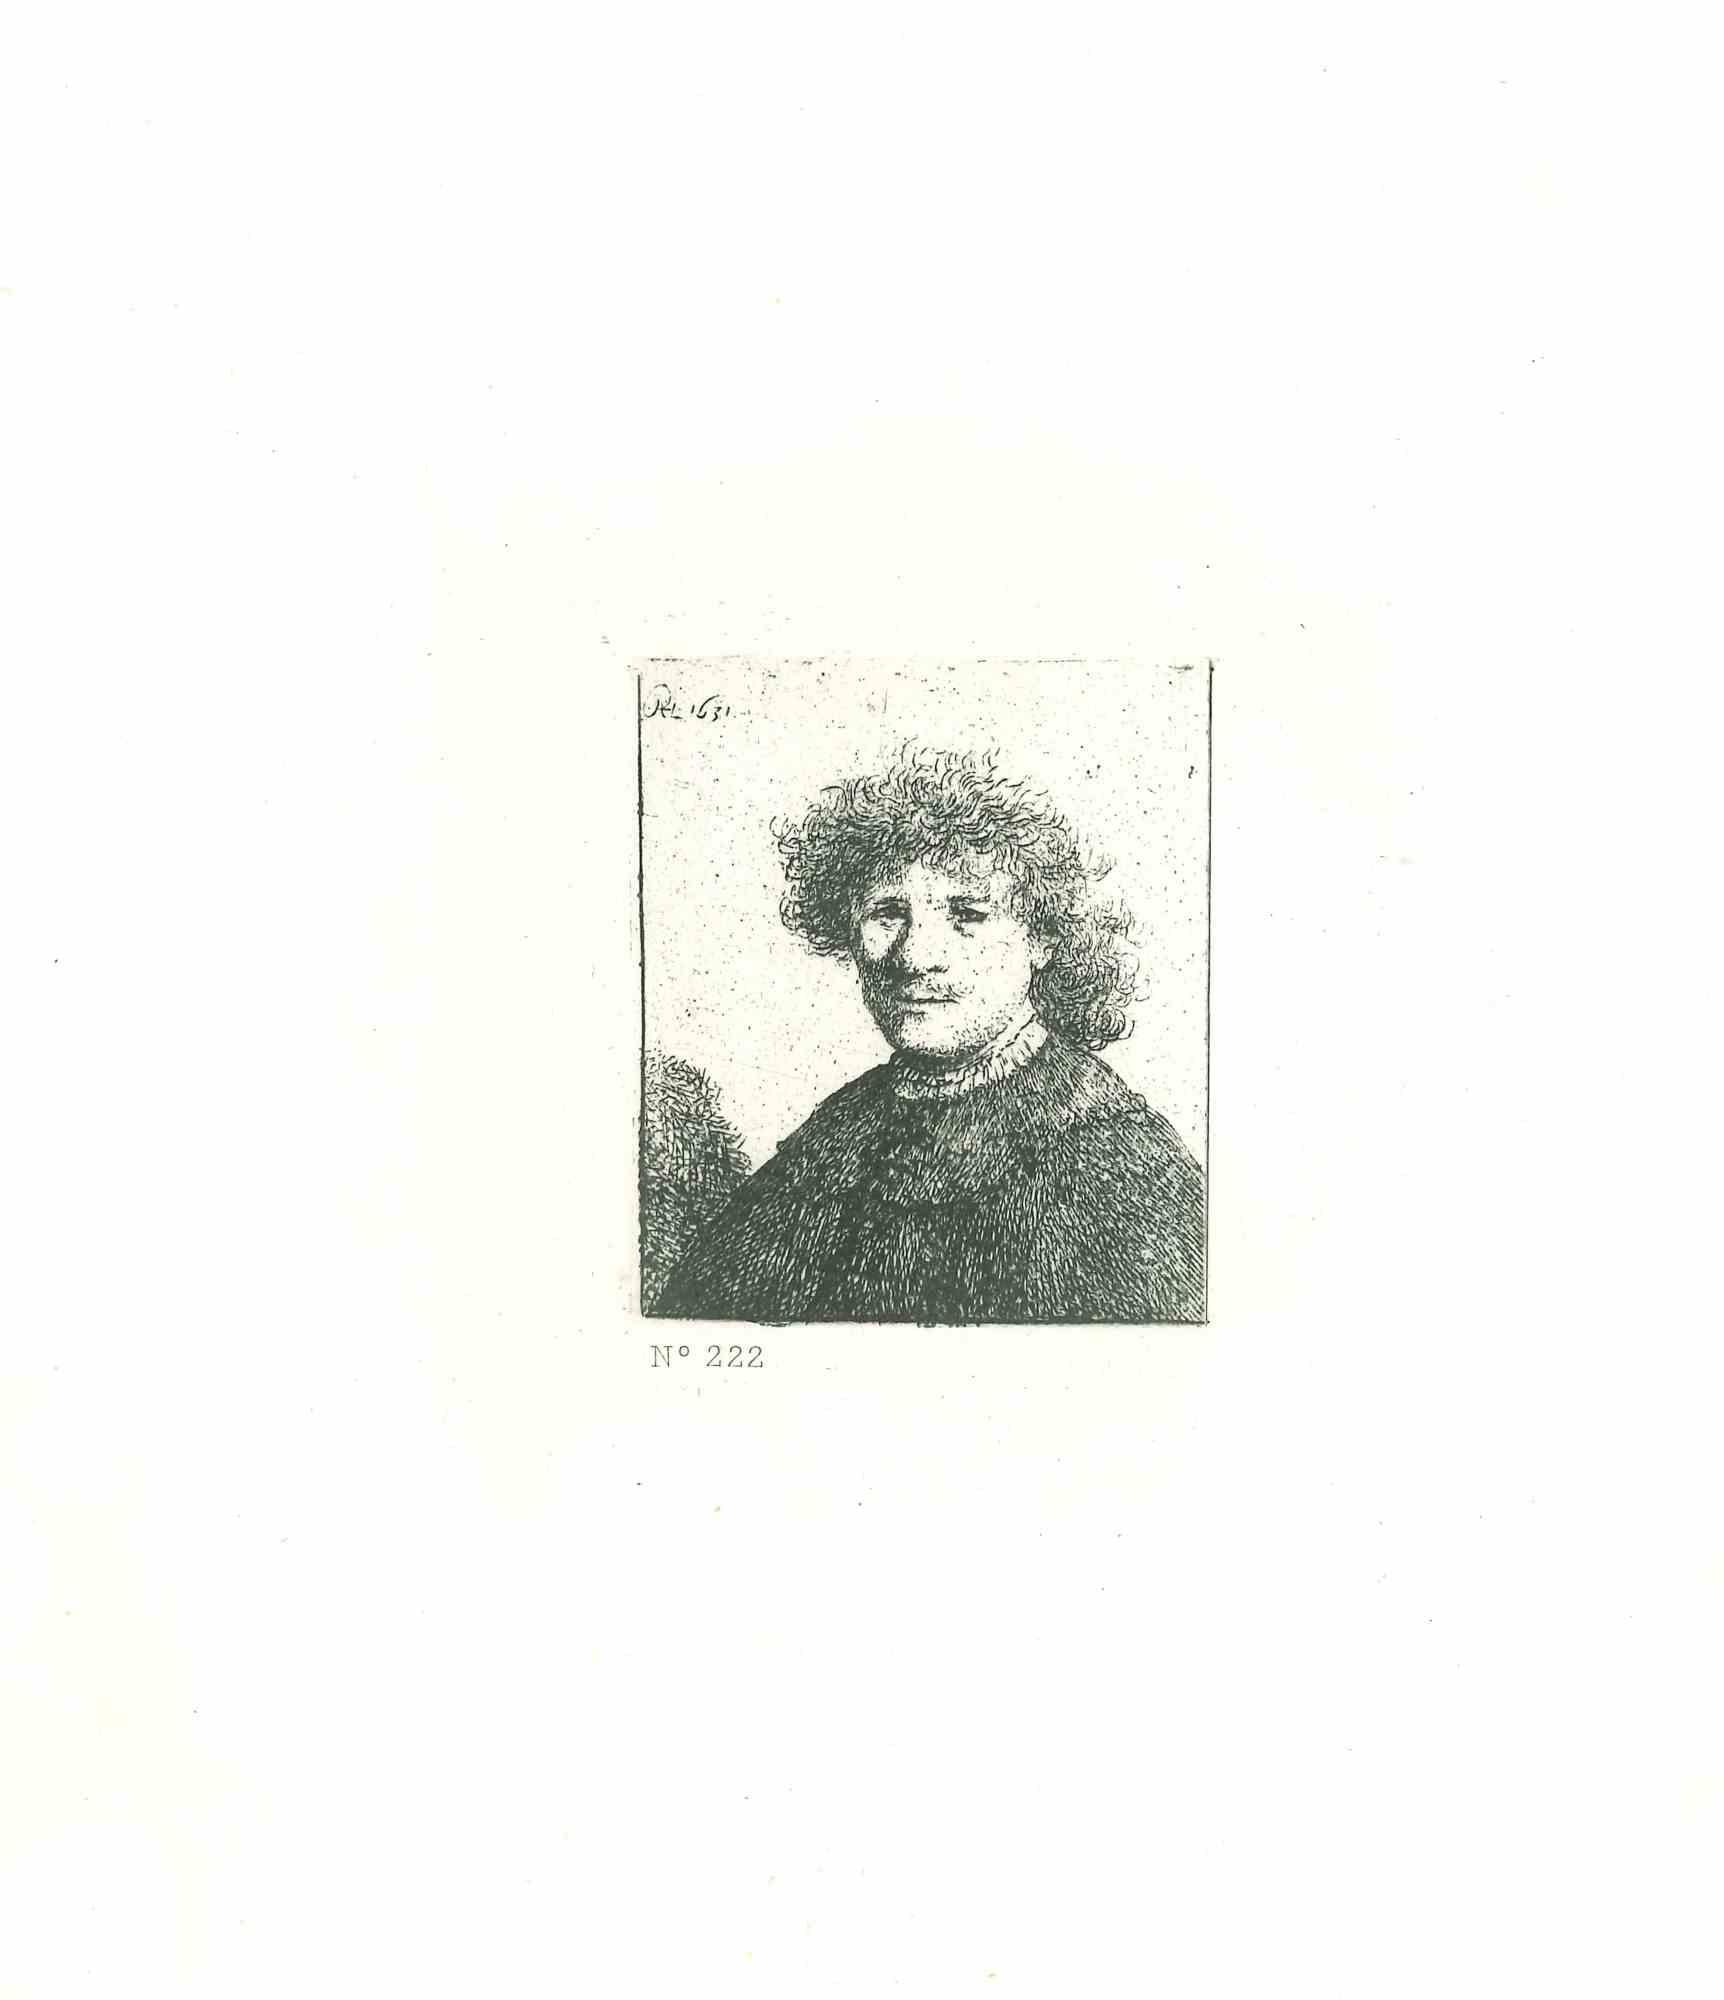 Charles Amand Durand Portrait Print - Self-portrait  - Engraving after Rembrandt - 19th Century